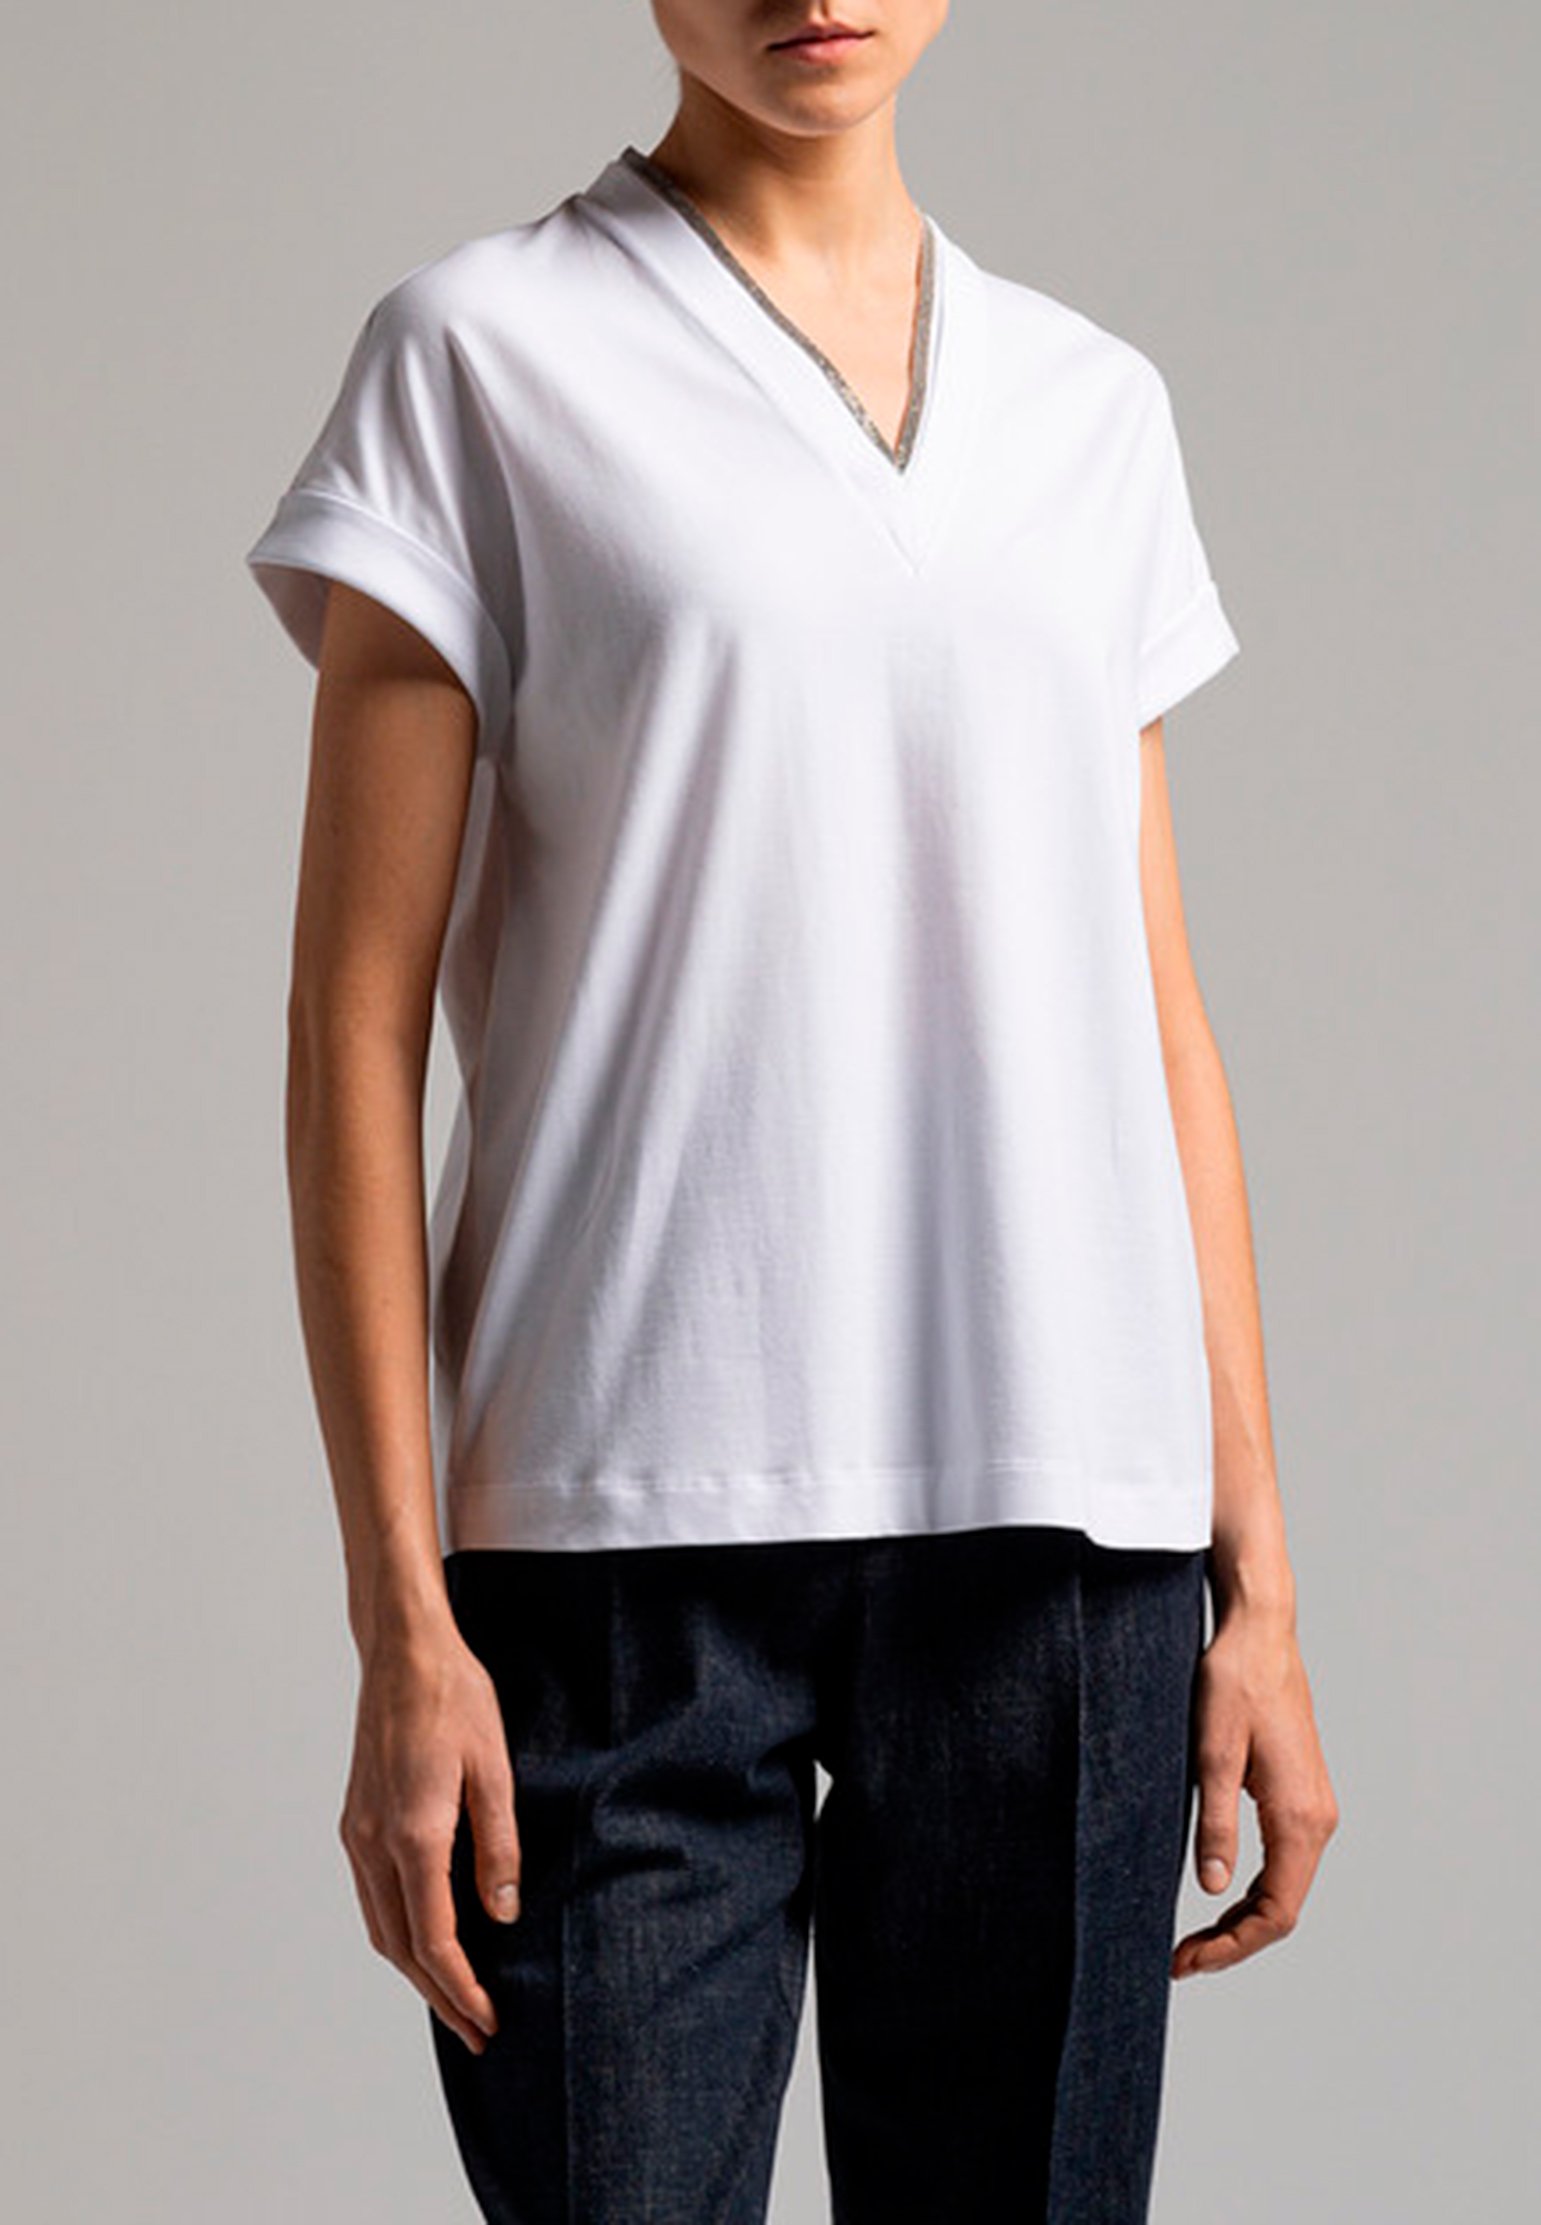 T-Shirt BRUNELLO CUCINELLI Color: white (Code: 270) in online store Allure